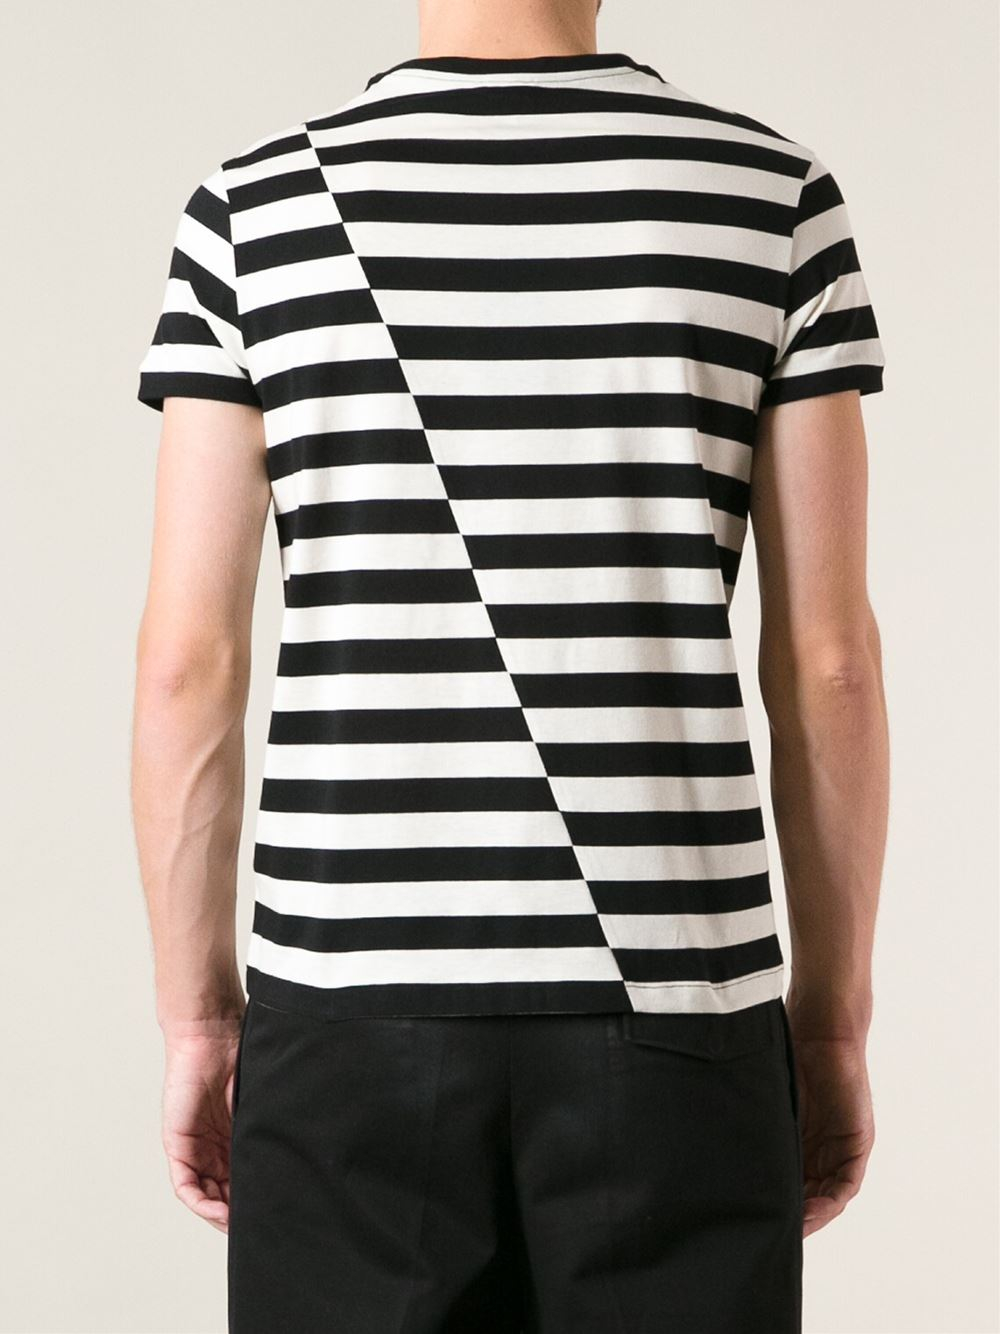 Lyst - Saint Laurent Asymmetric Striped T-Shirt in Black for Men